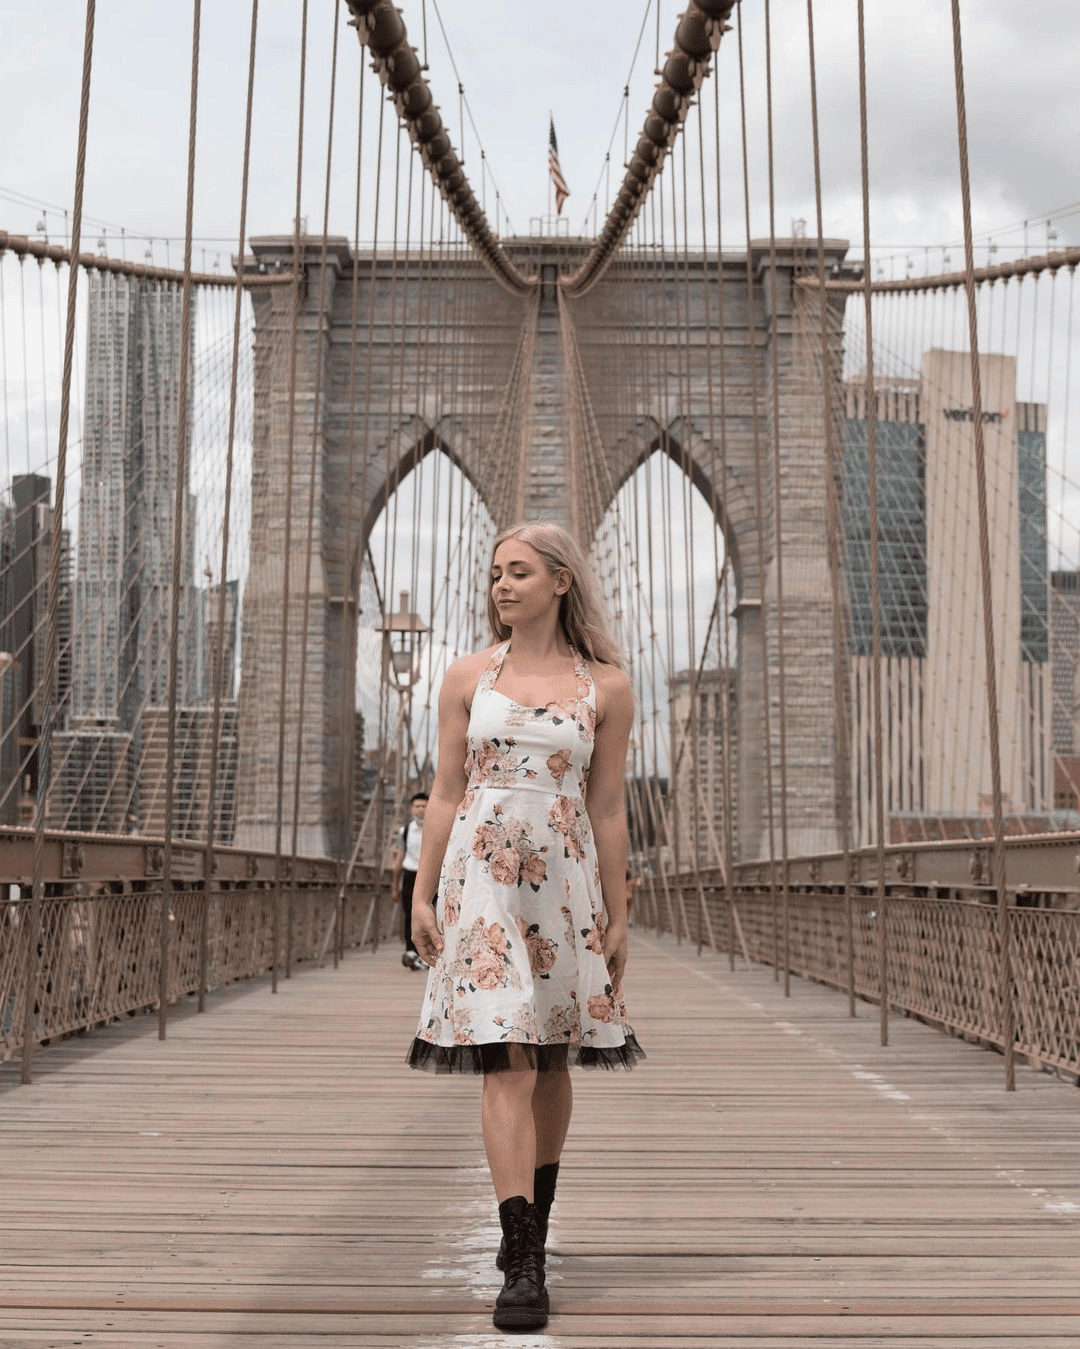 Melina posing on a beautiful bridge